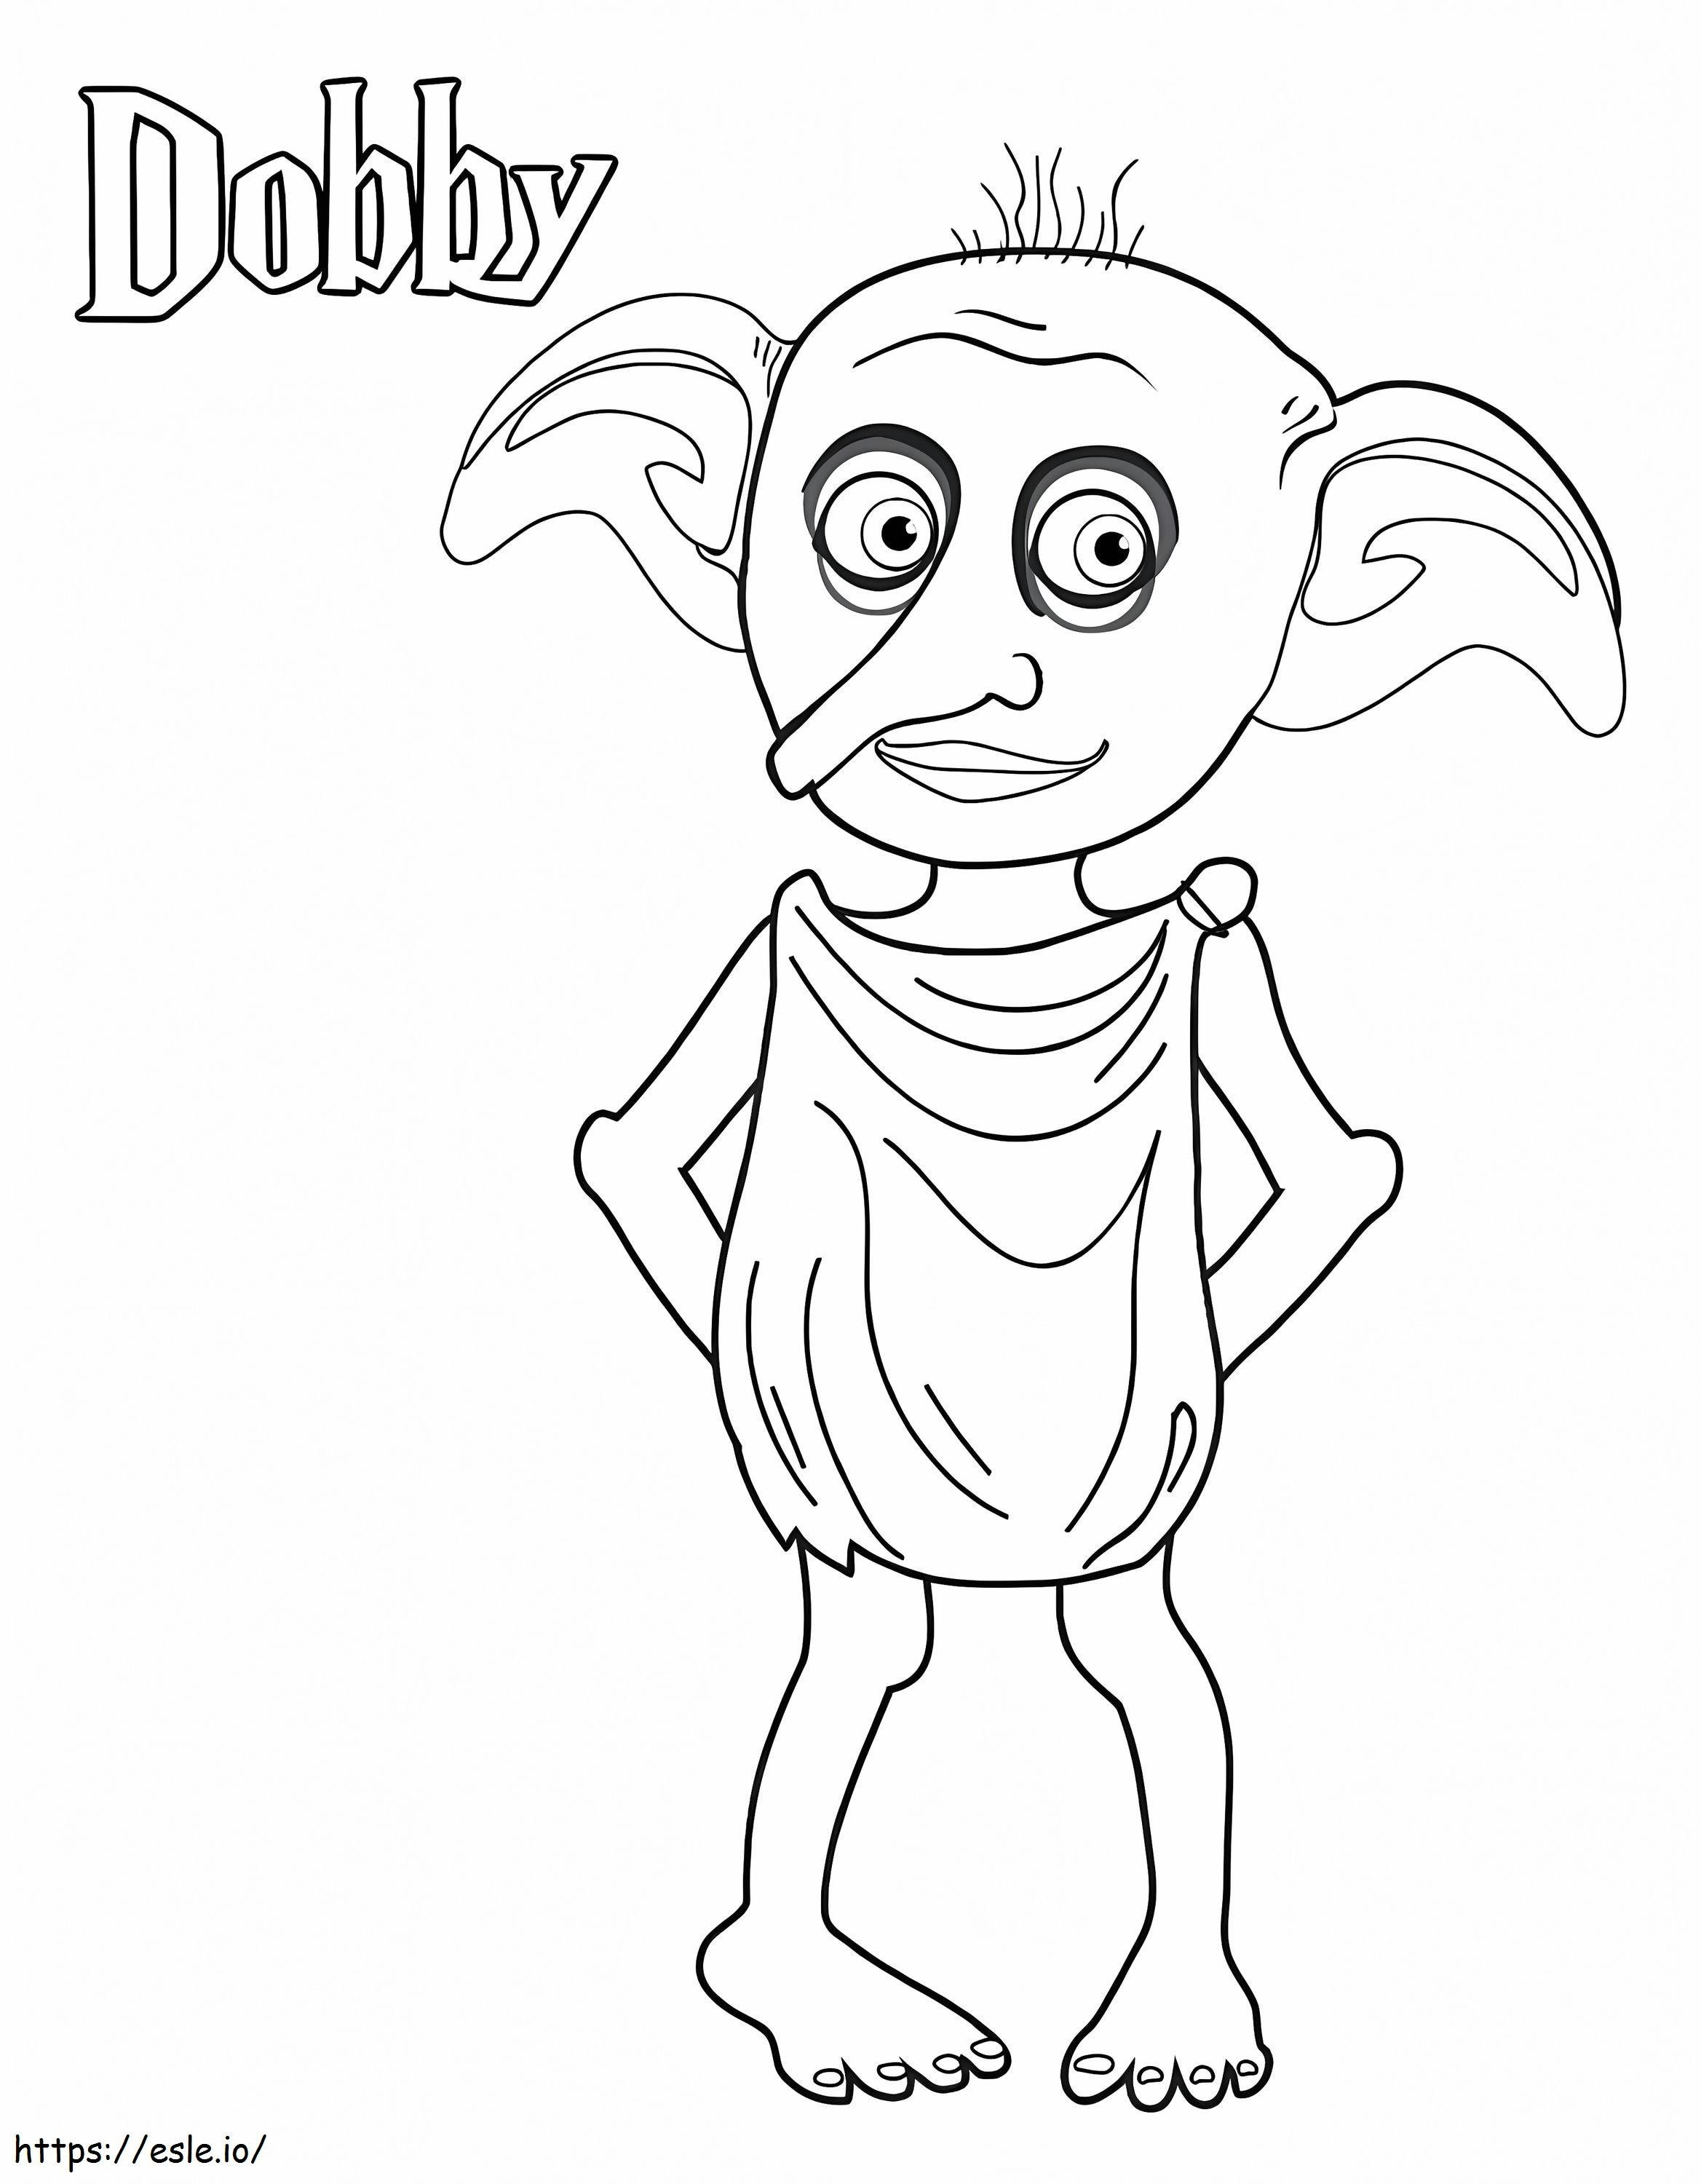 Coloriage Dobby 1 à imprimer dessin